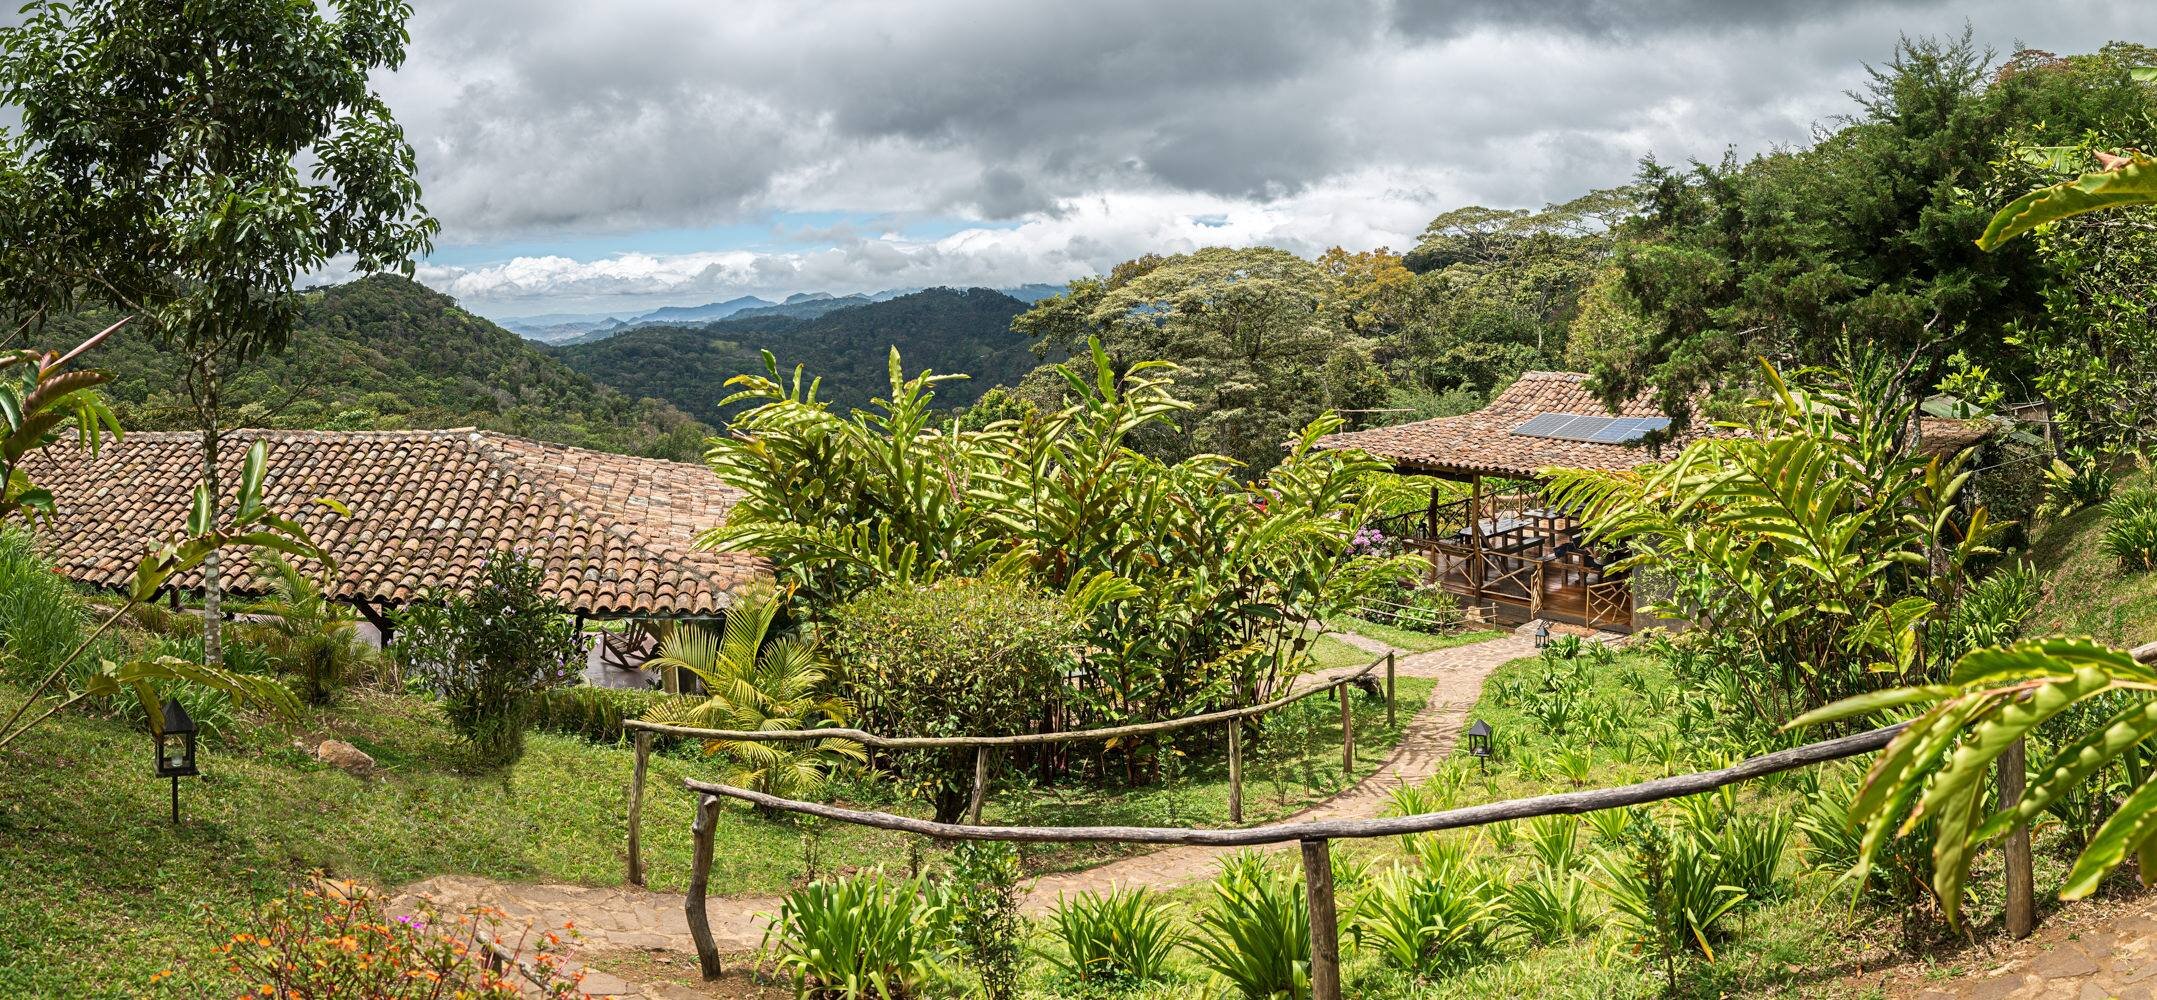 Property for Sale Nicaragua Sustainable Award Winning Eco Lodge With Coffee Farm 7.jpg